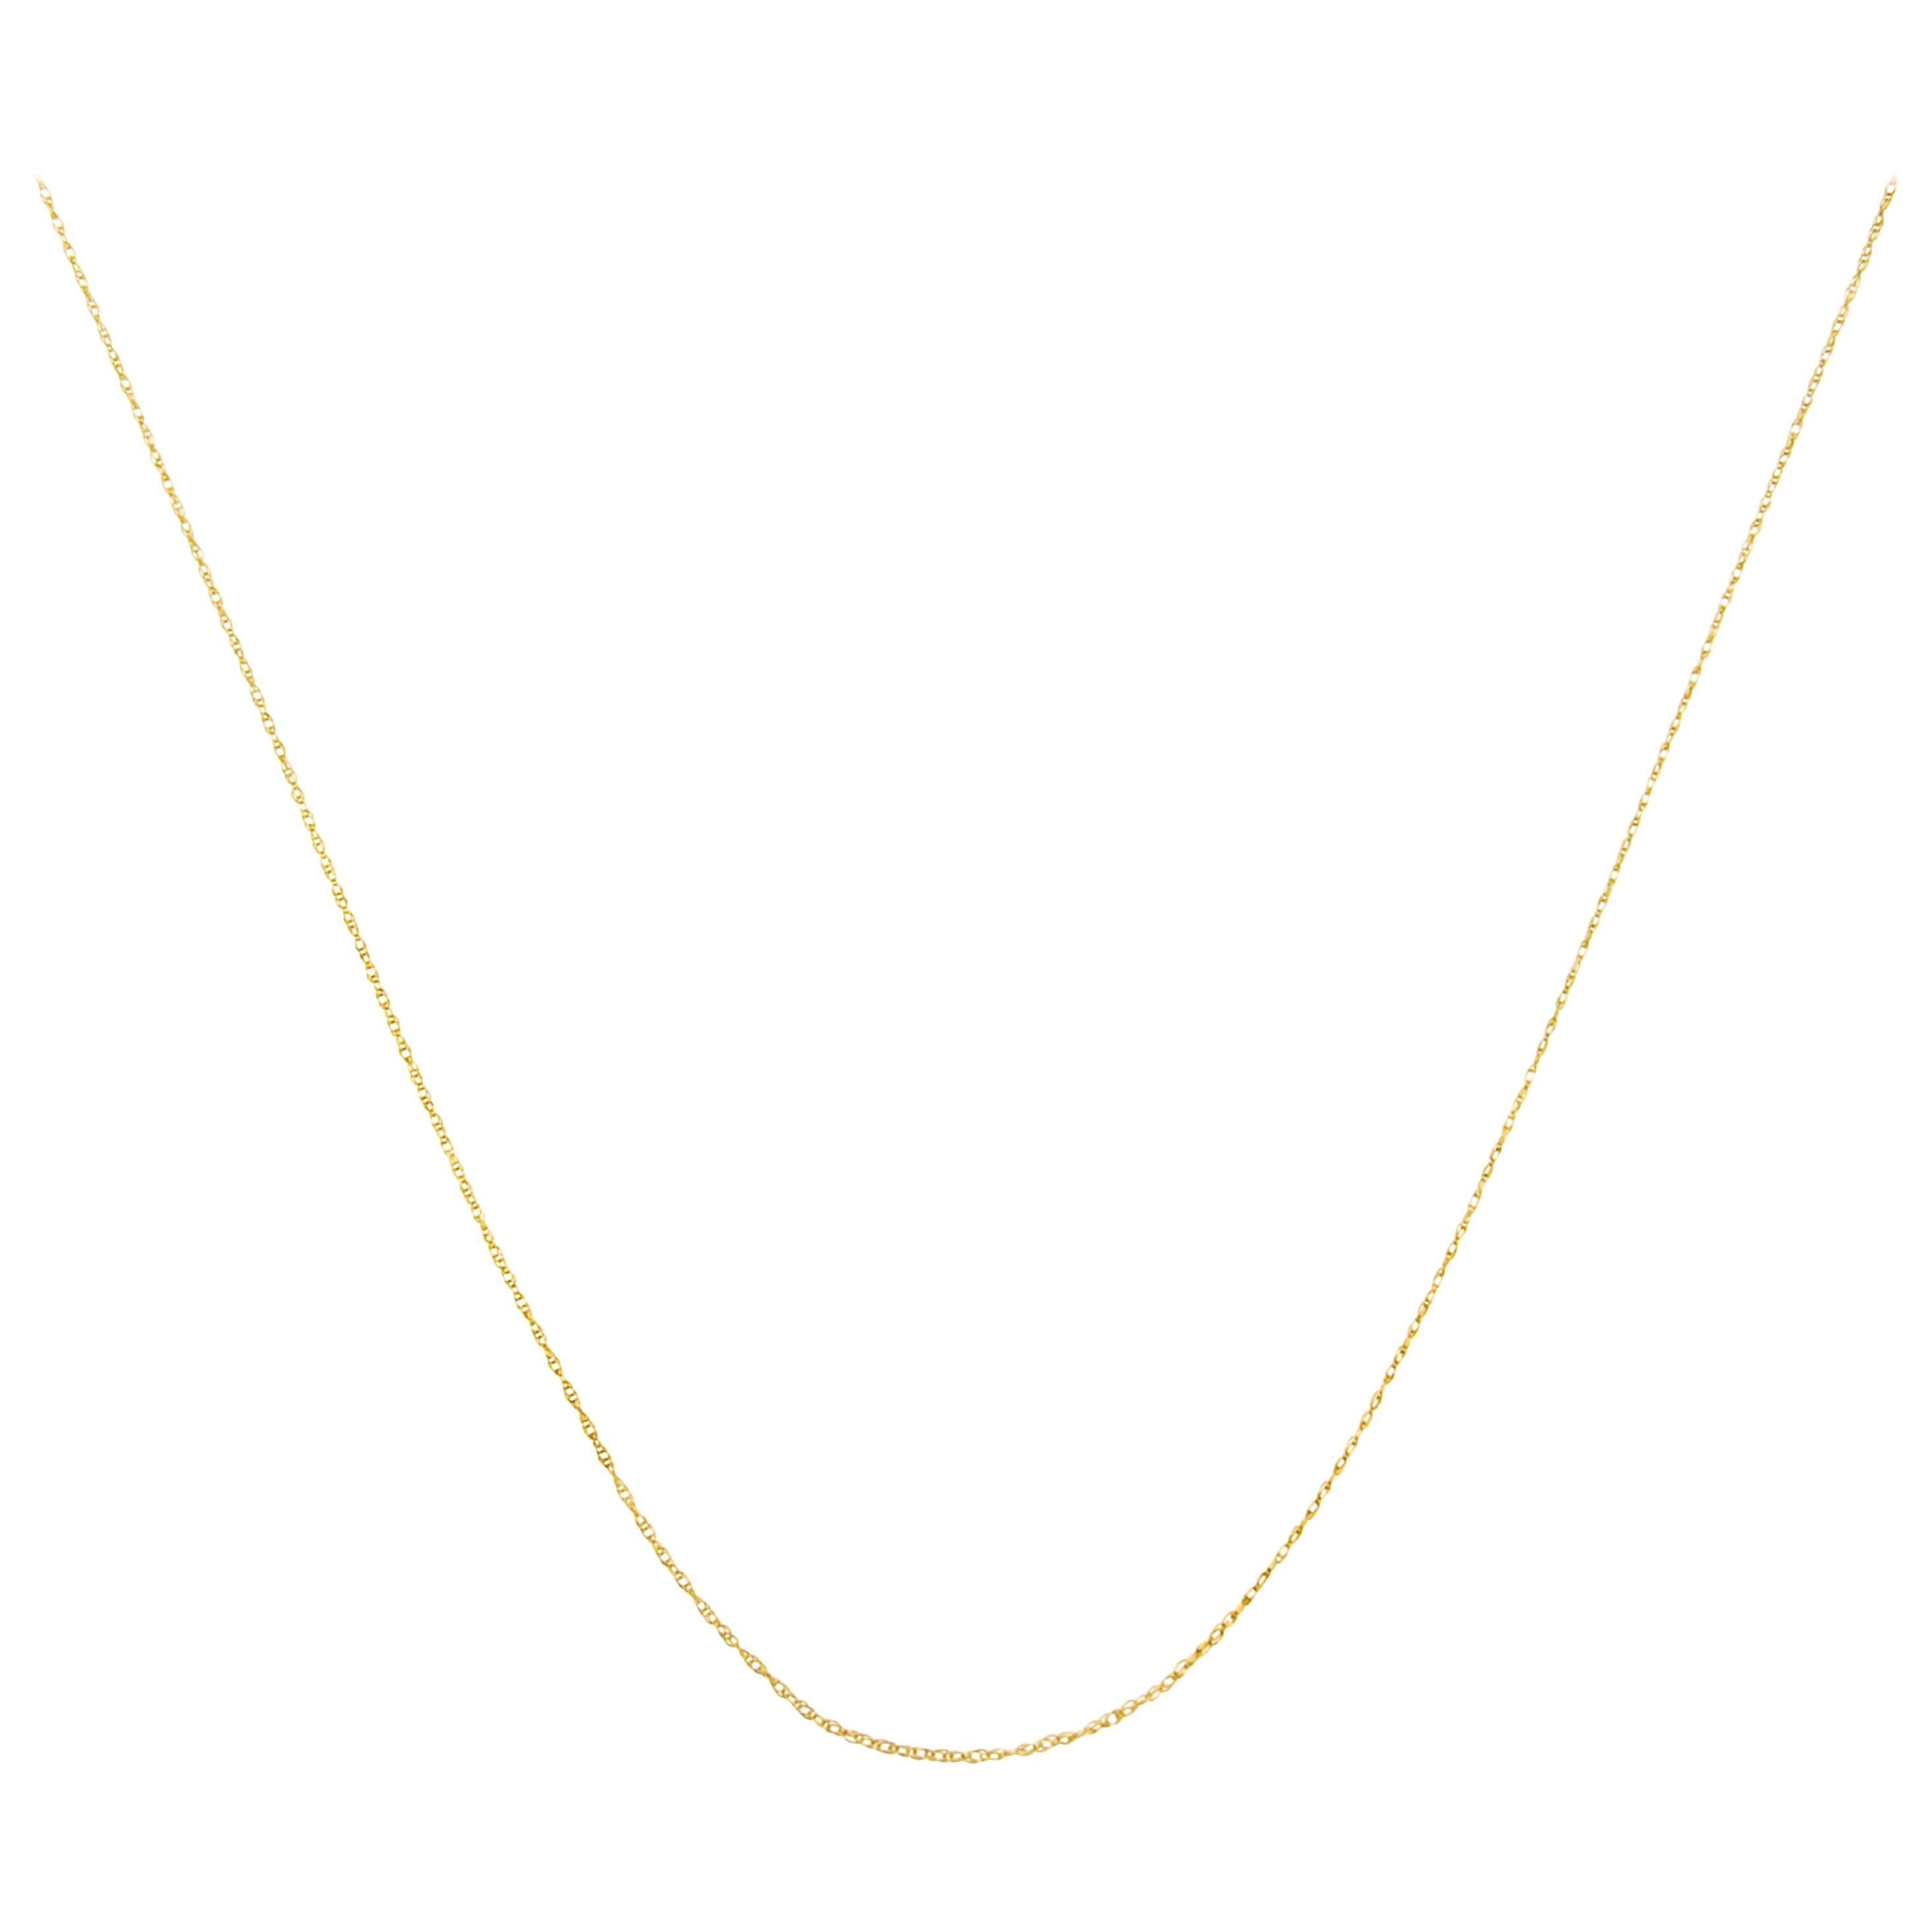 Collier unisexe en or jaune 10K avec chaîne en corde